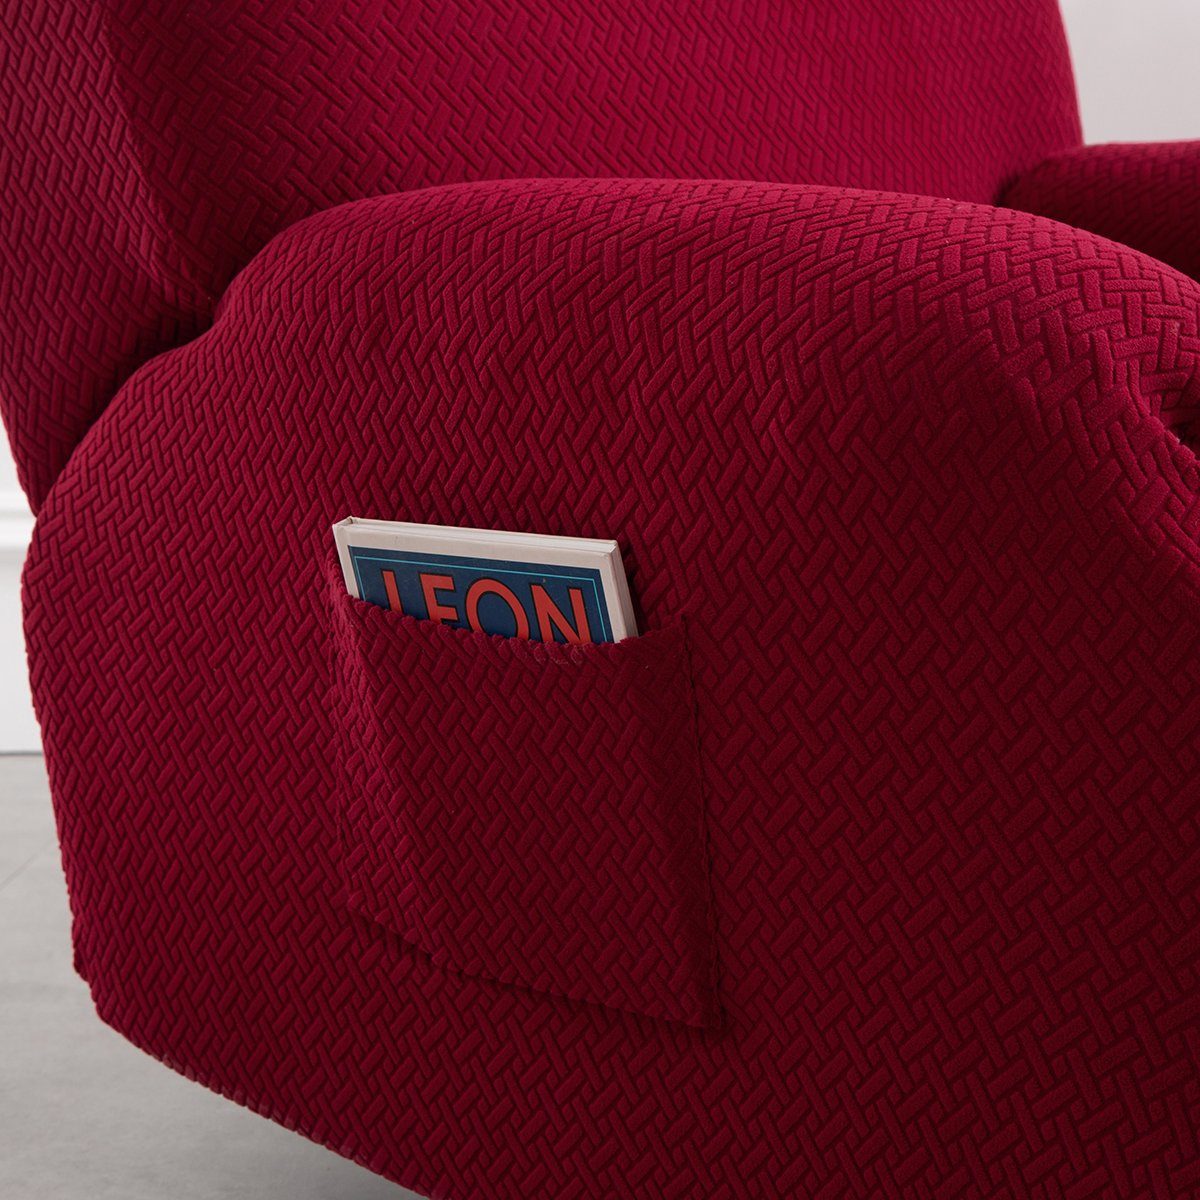 Relaxsessel Stretchhusse, Komplett mit Sessel, Sesselhusse Liege Strukturoptik Sesselbezug Rosnek, Rot für